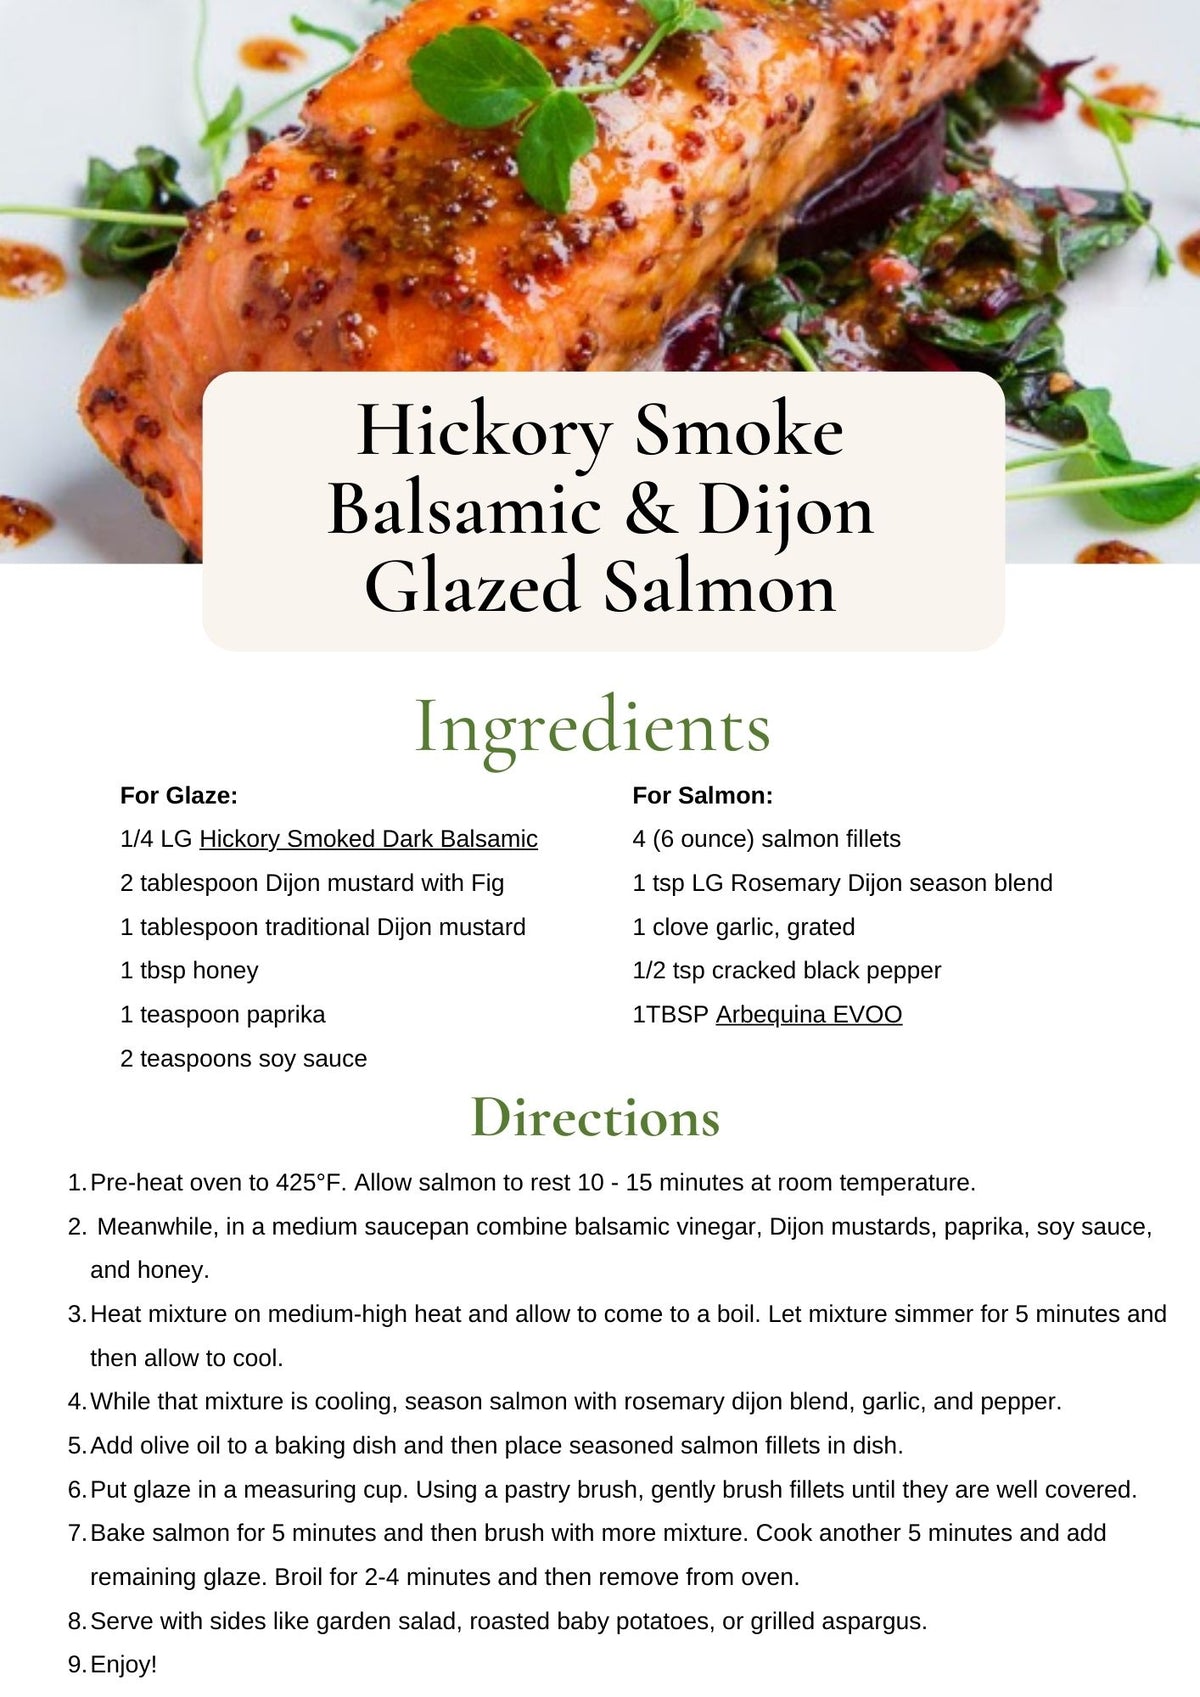 Hickory Smoke Balsamic & Dijon Glazed Salmon